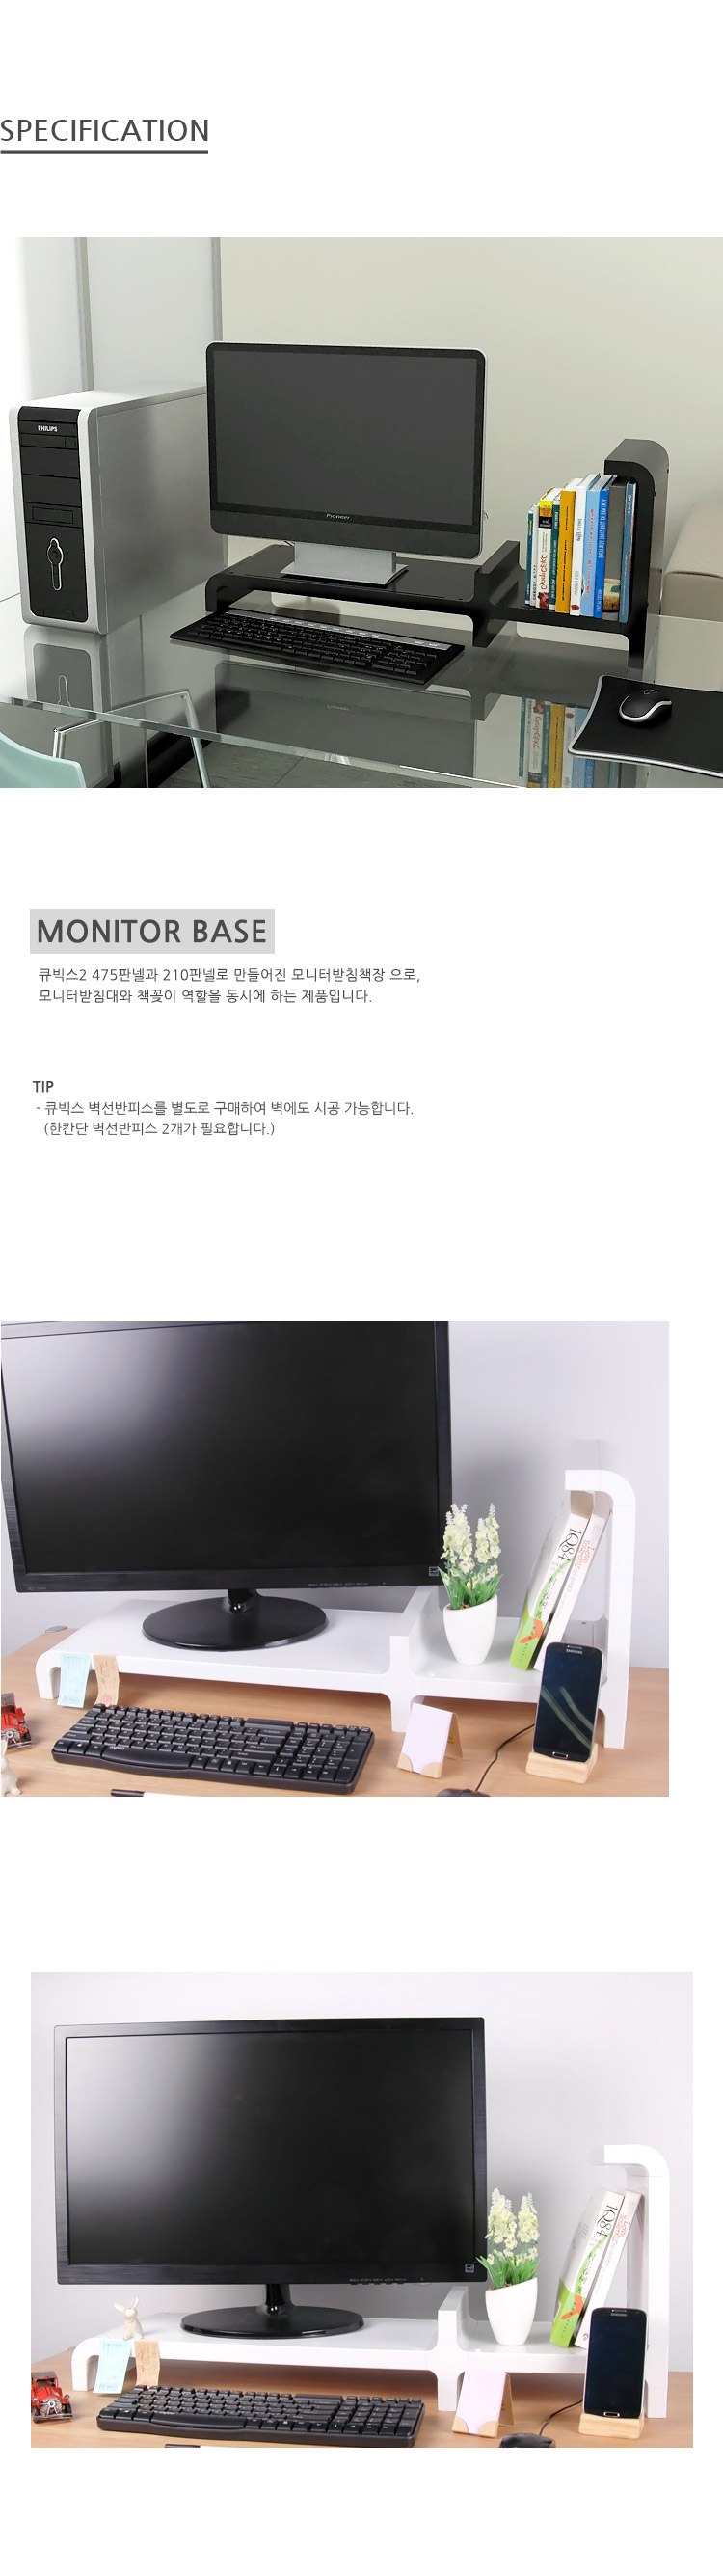 750_cu2_monitor_base_no3_01_1.jpg